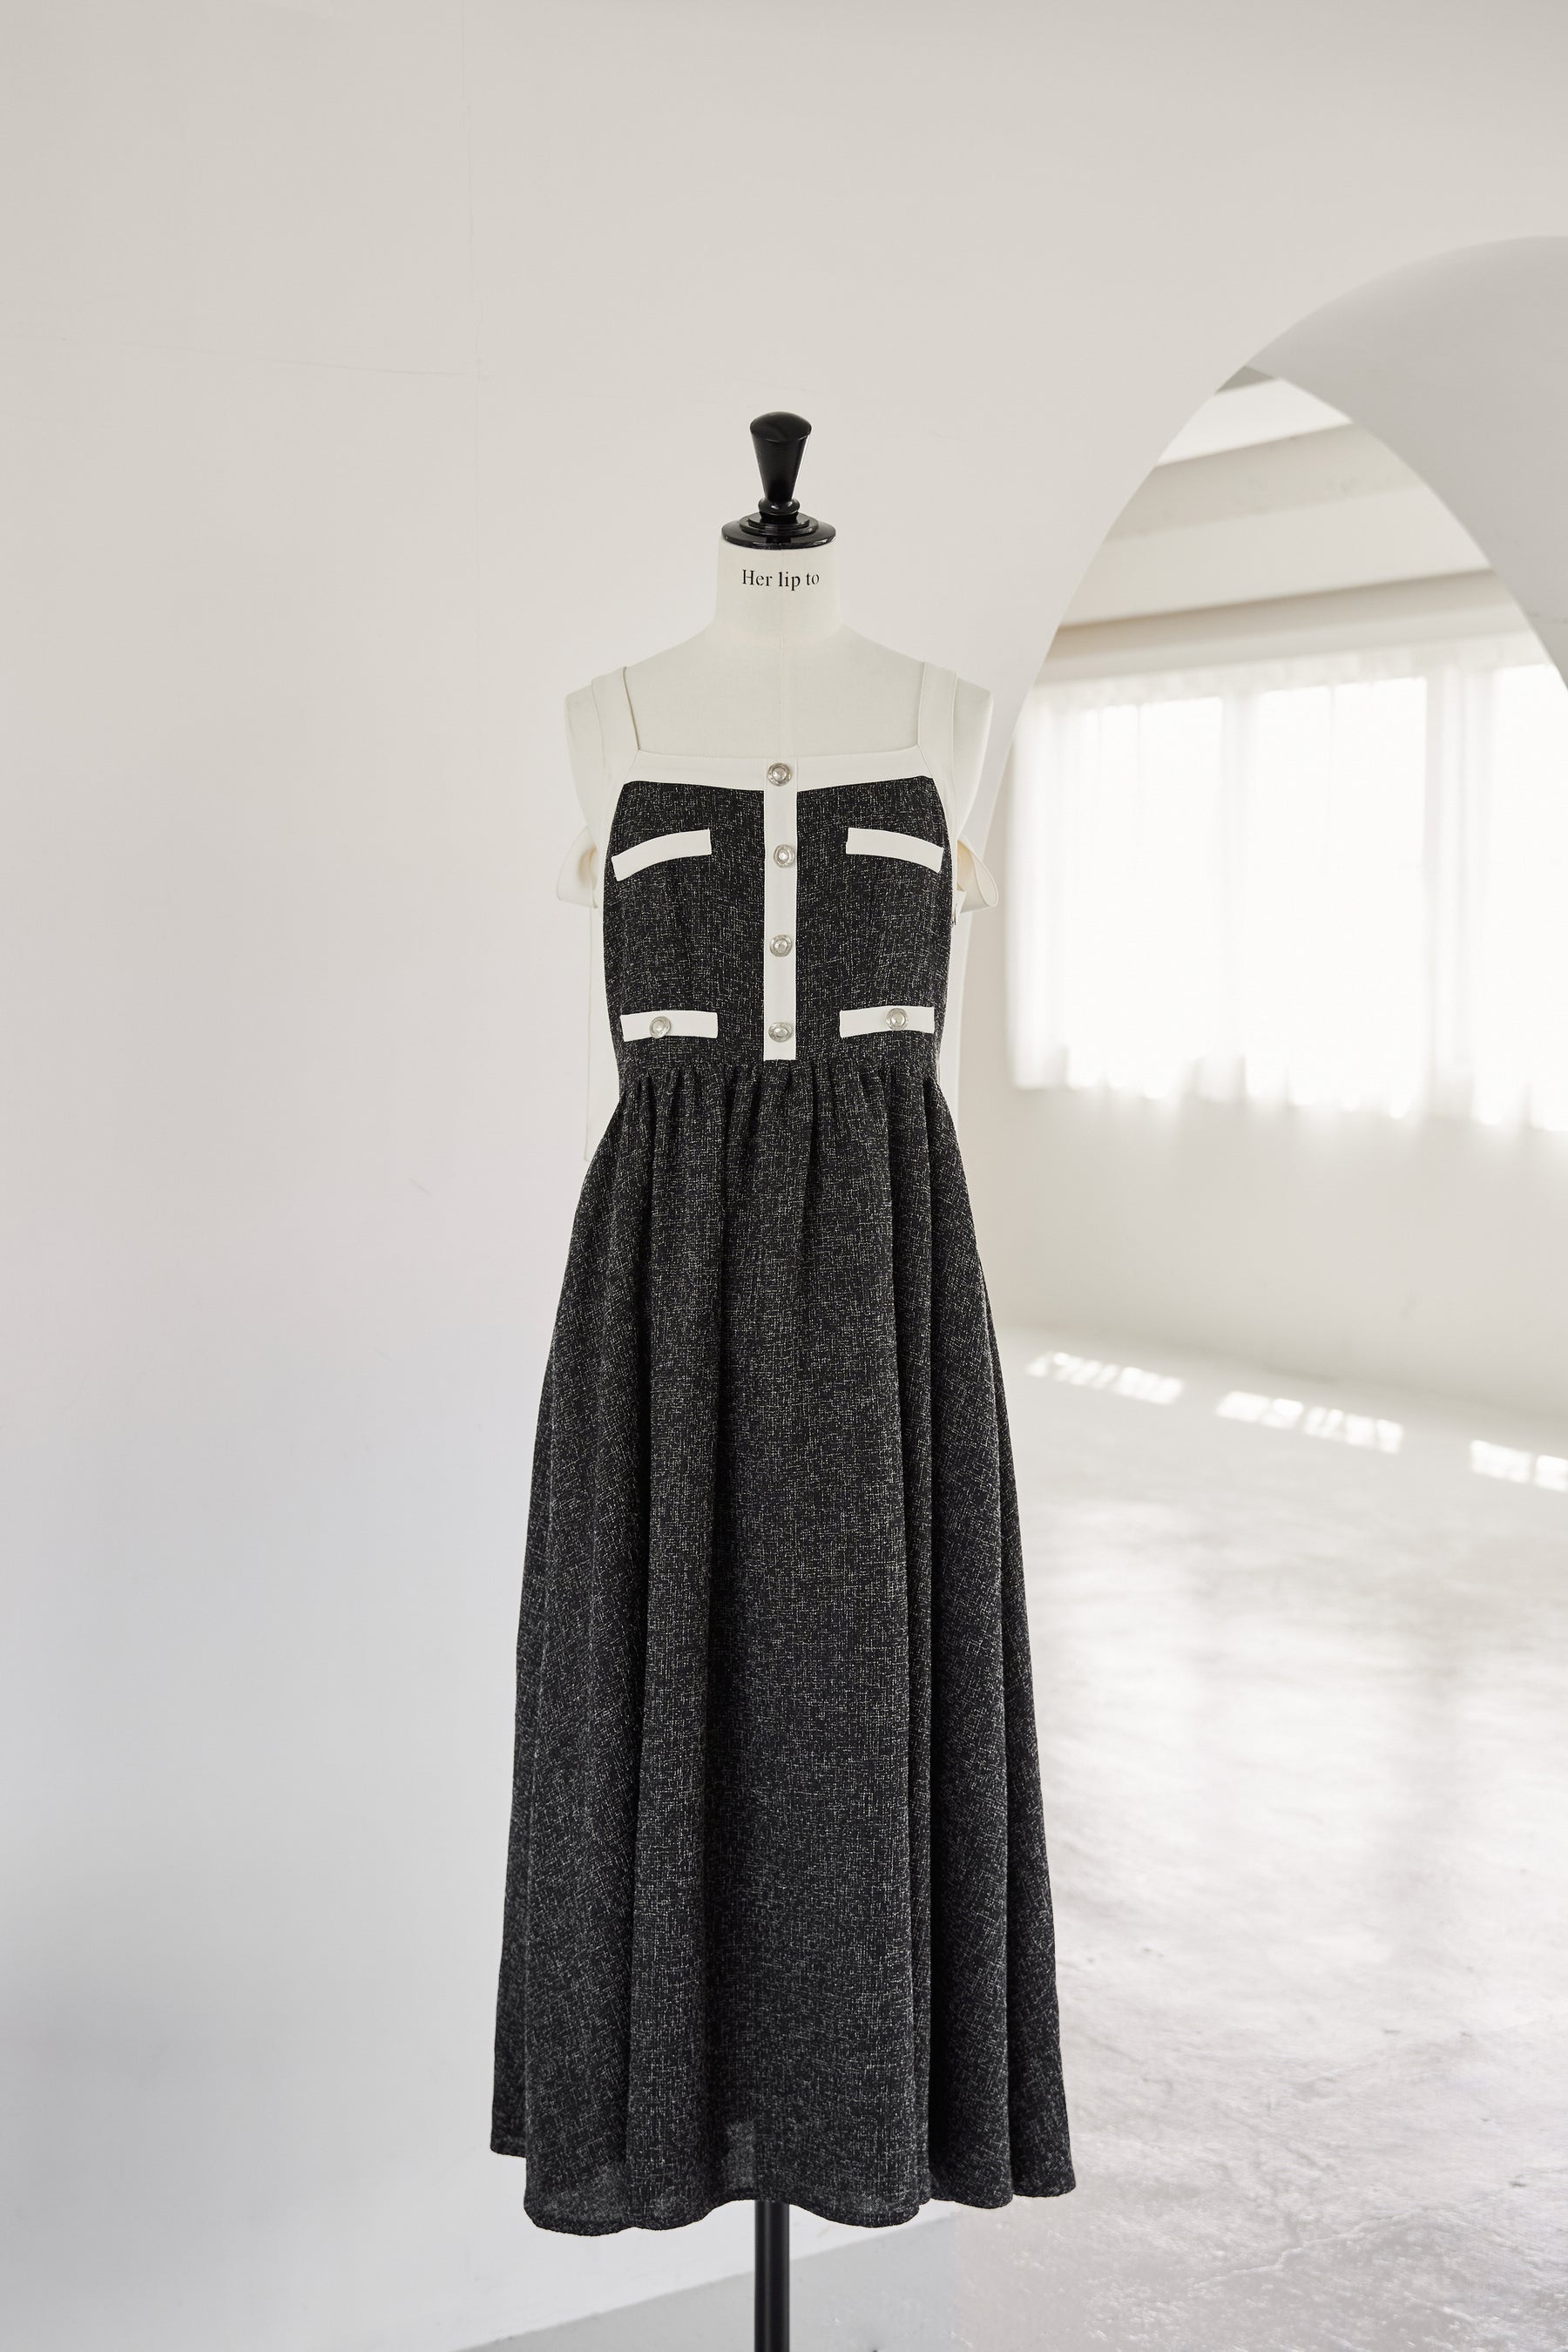 Herlipto Verona Tweed Long Dress S